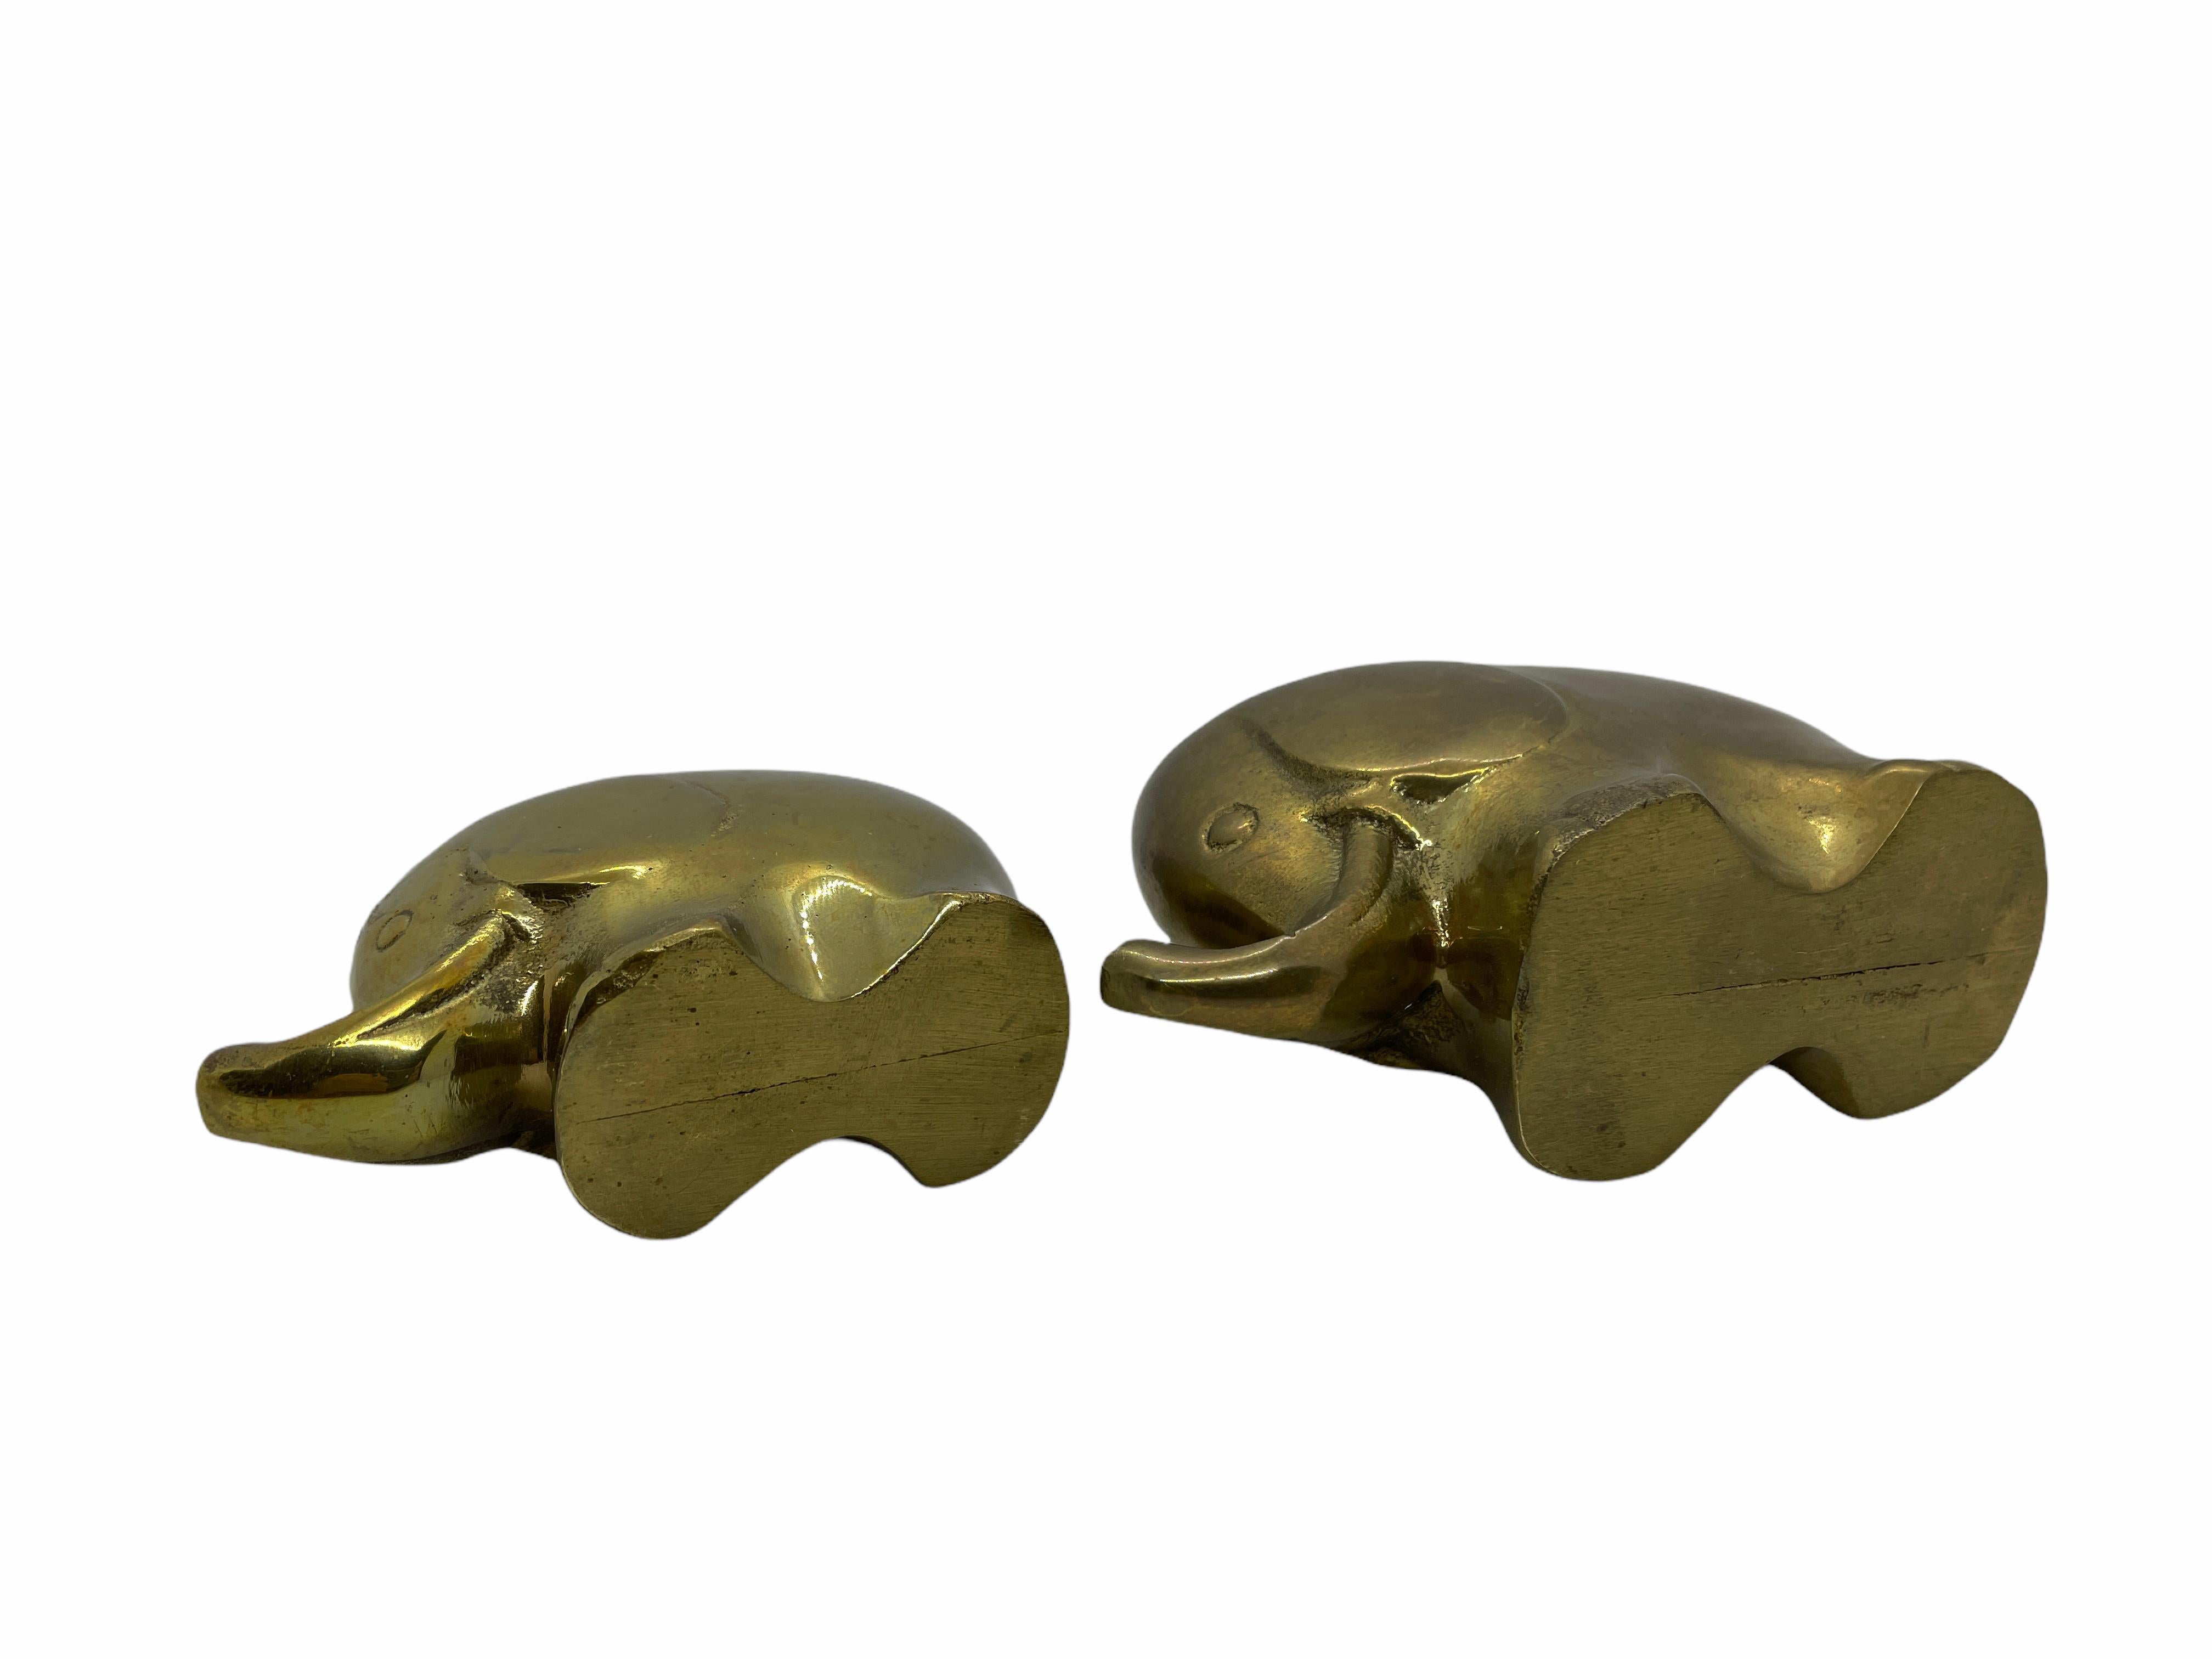 Fife Decorative Elephant Herd Sculpture Statue Brass Midcentury Modern German For Sale 1